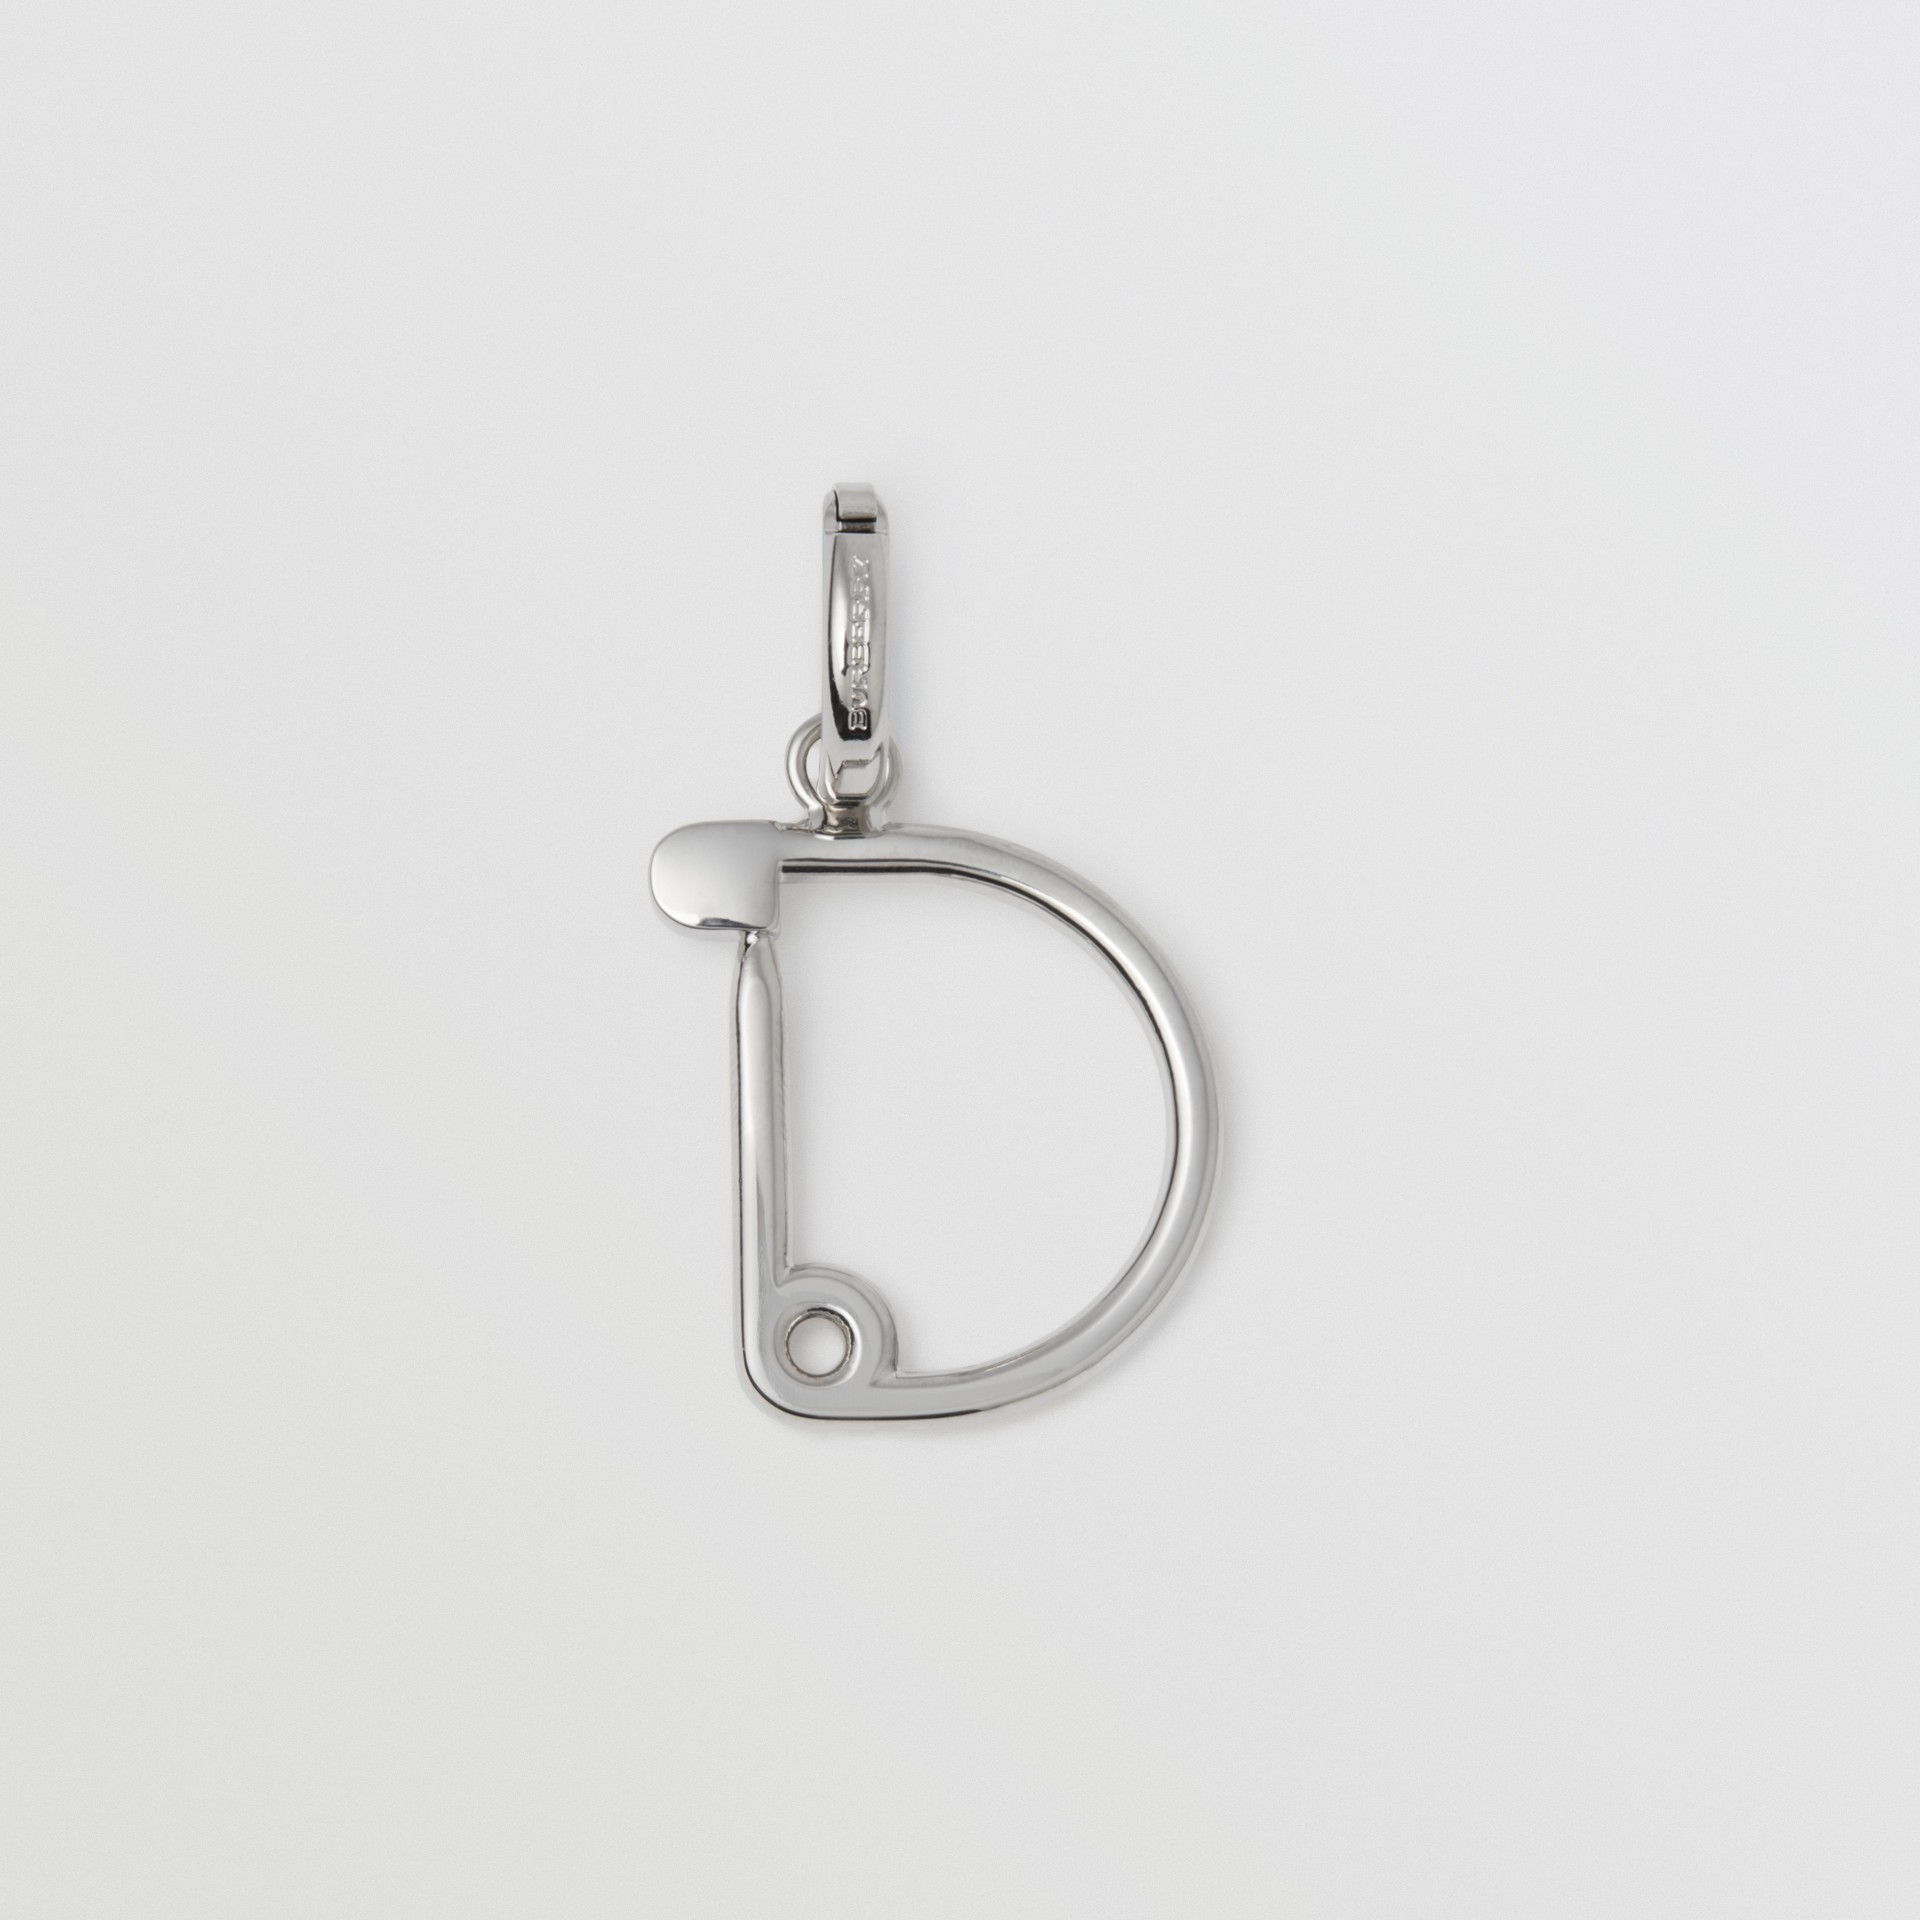 BURBERRY Kilt Pin ‘D’ Alphabet Charm